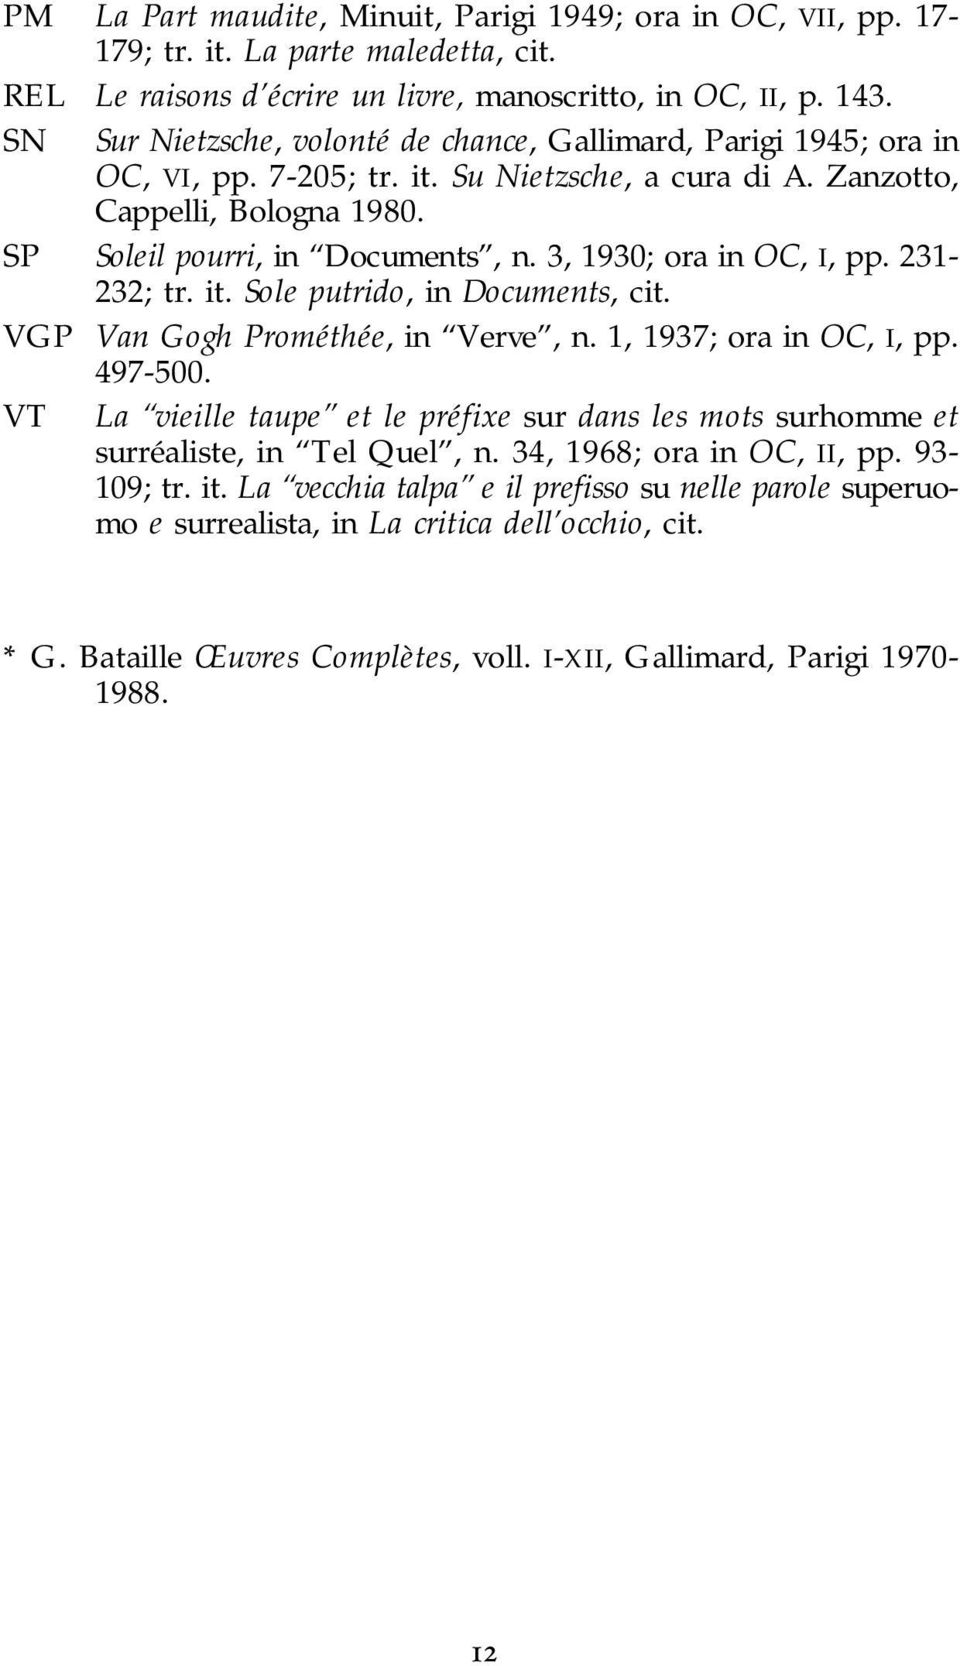 3, 1930; ora in OC, I, pp. 231-232; tr. it. Sole putrido, in Documents, cit. VGP Van Gogh Prométhée, in Verve, n. 1, 1937; ora in OC, I, pp. 497-500.